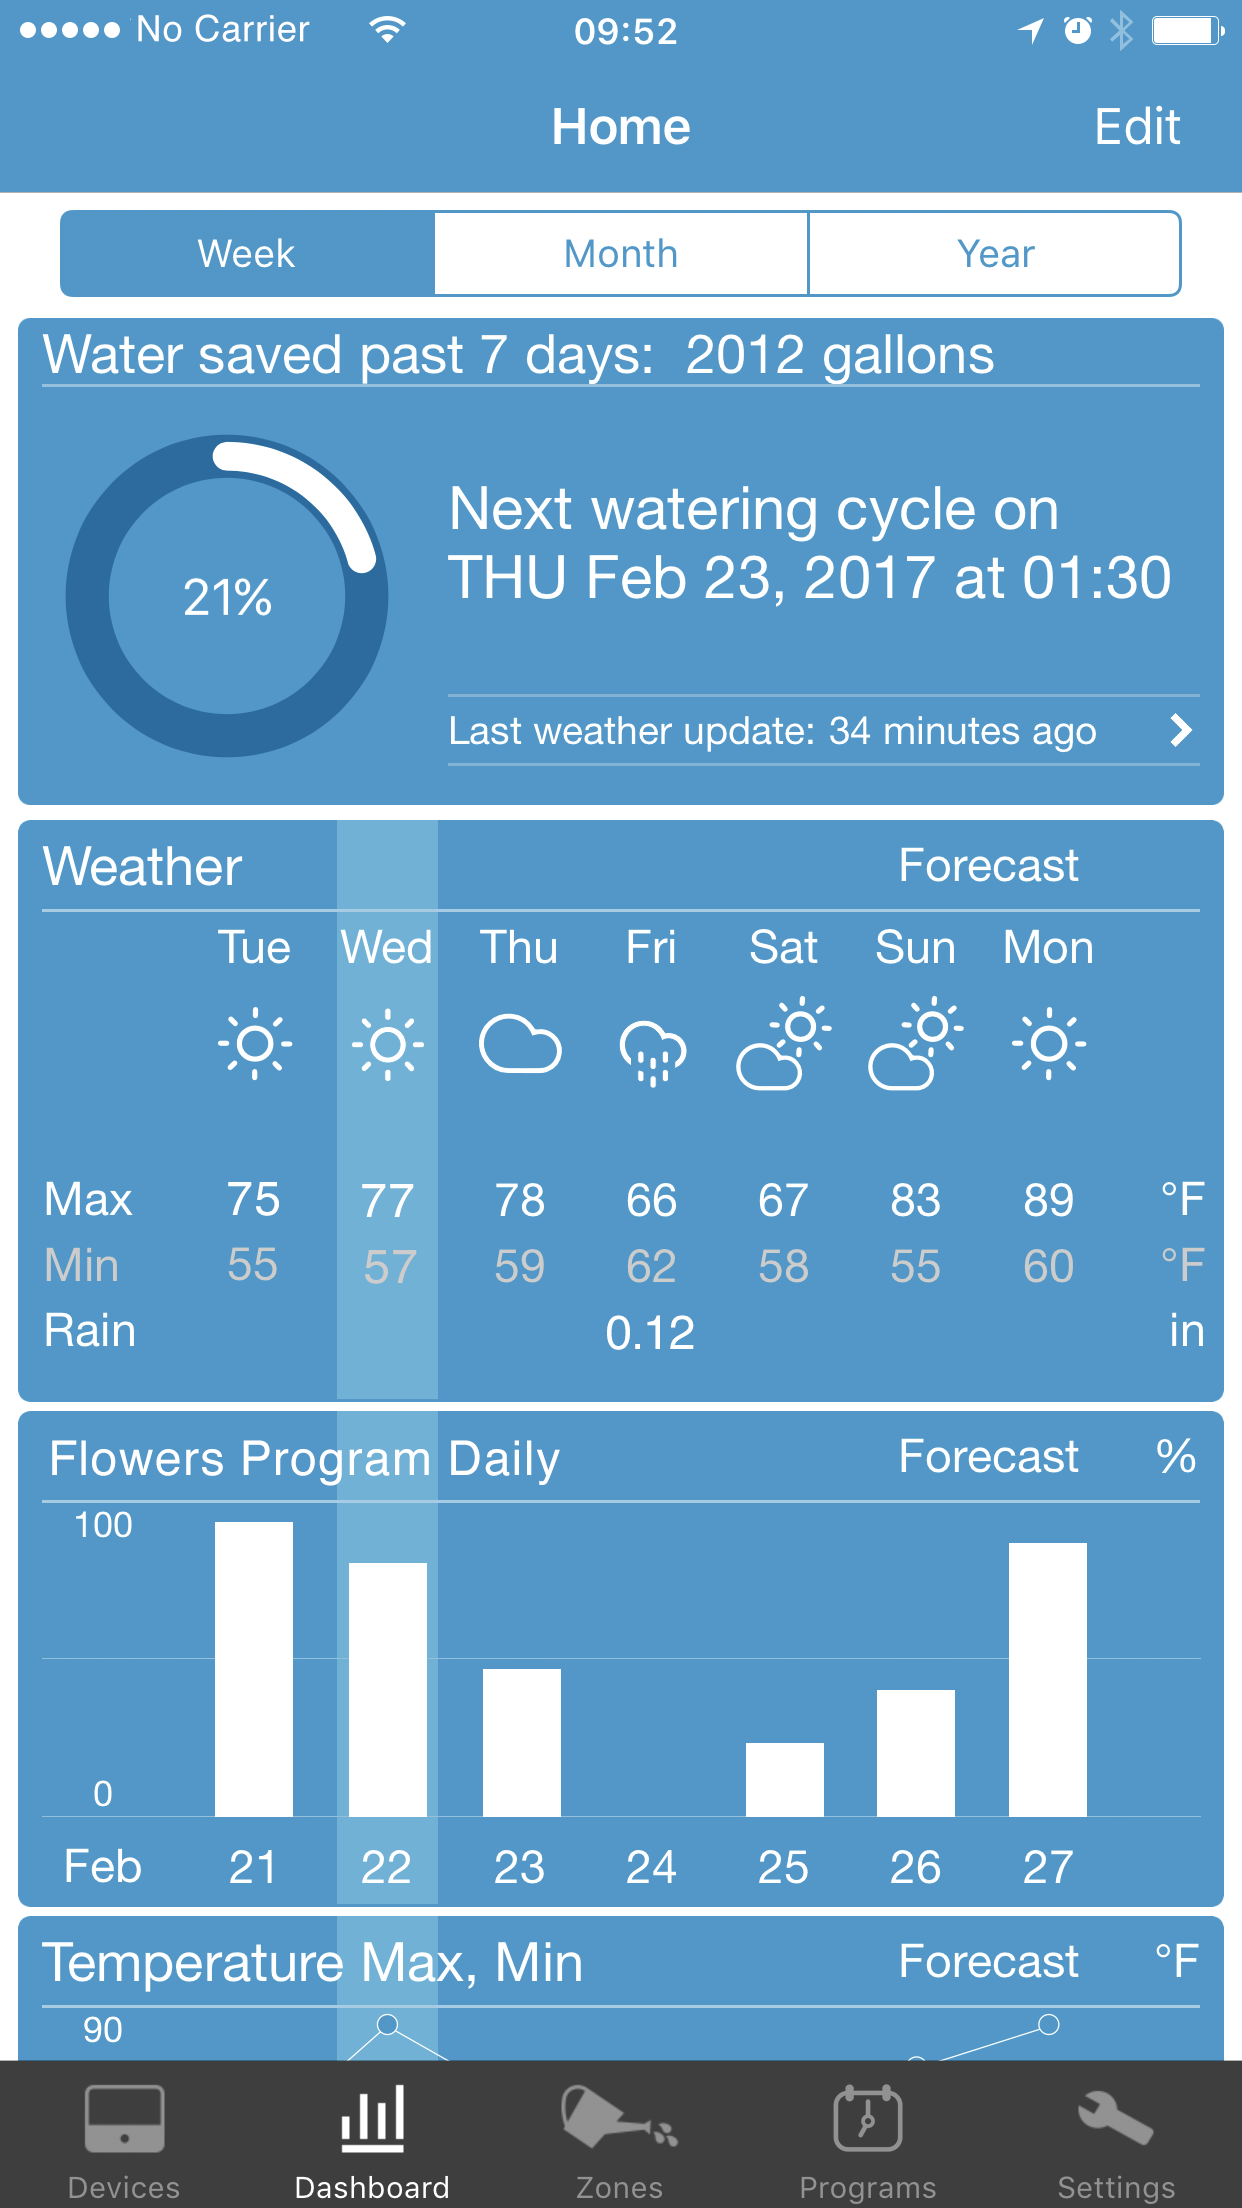 Dashboard screen of the RainMachine mobile application